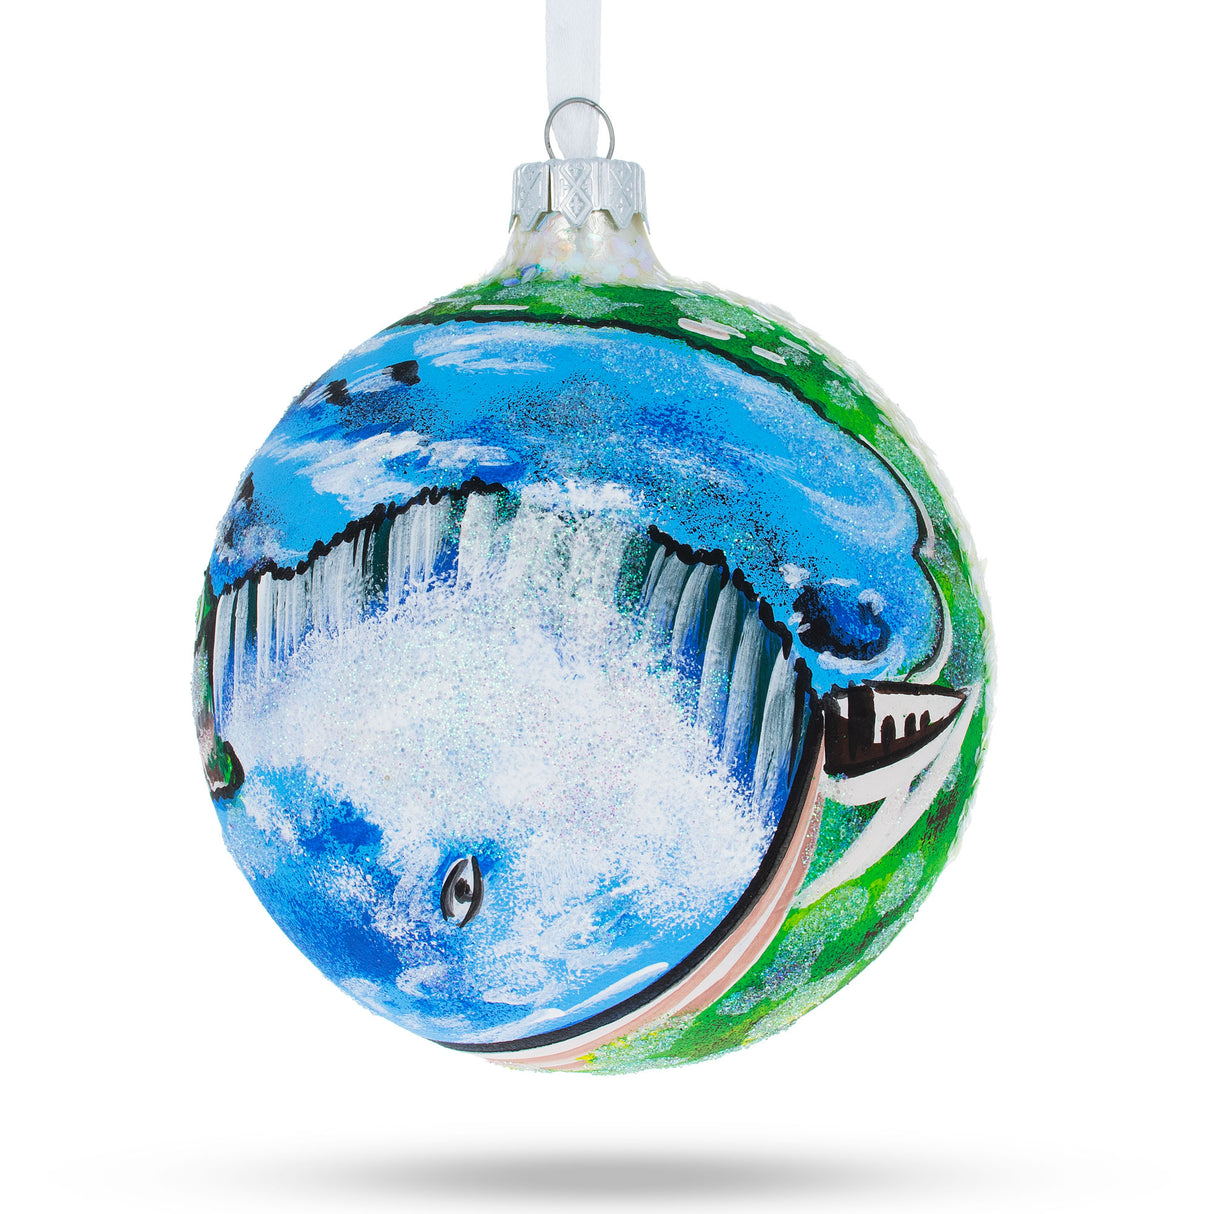 Niagara Falls, Canada USA Glass Ball Christmas Ornament 4 Inches in Multi color, Round shape